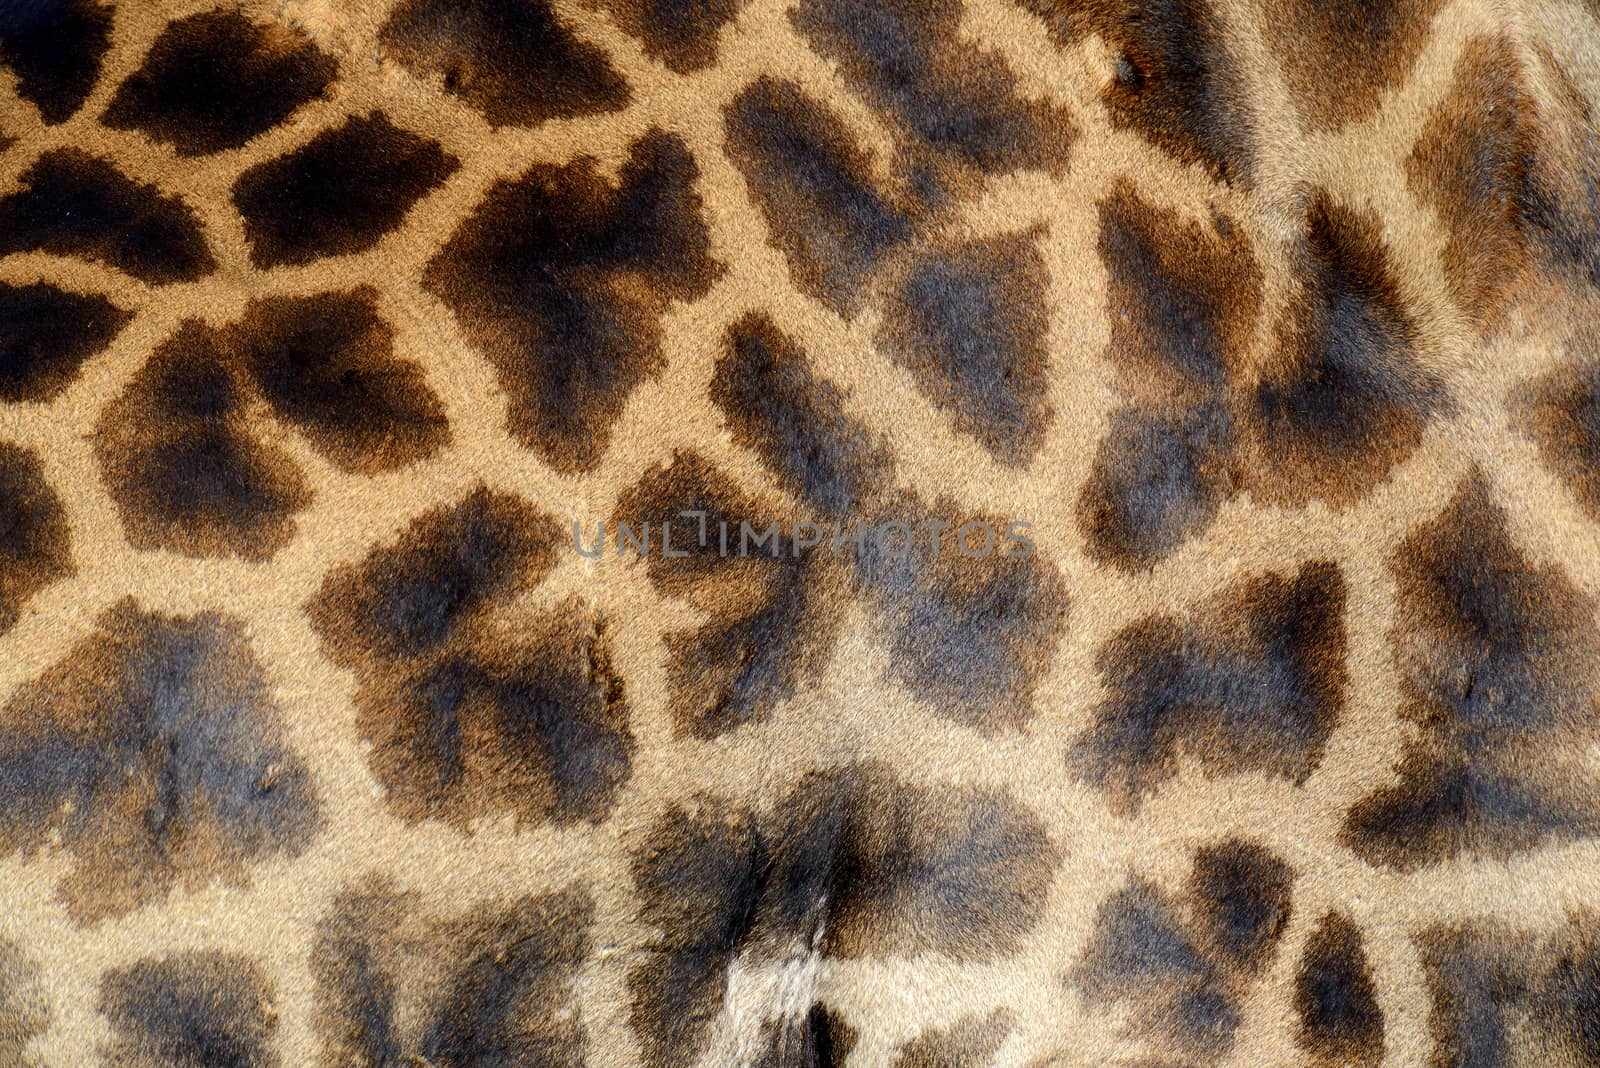 Giraffe skin by byrdyak